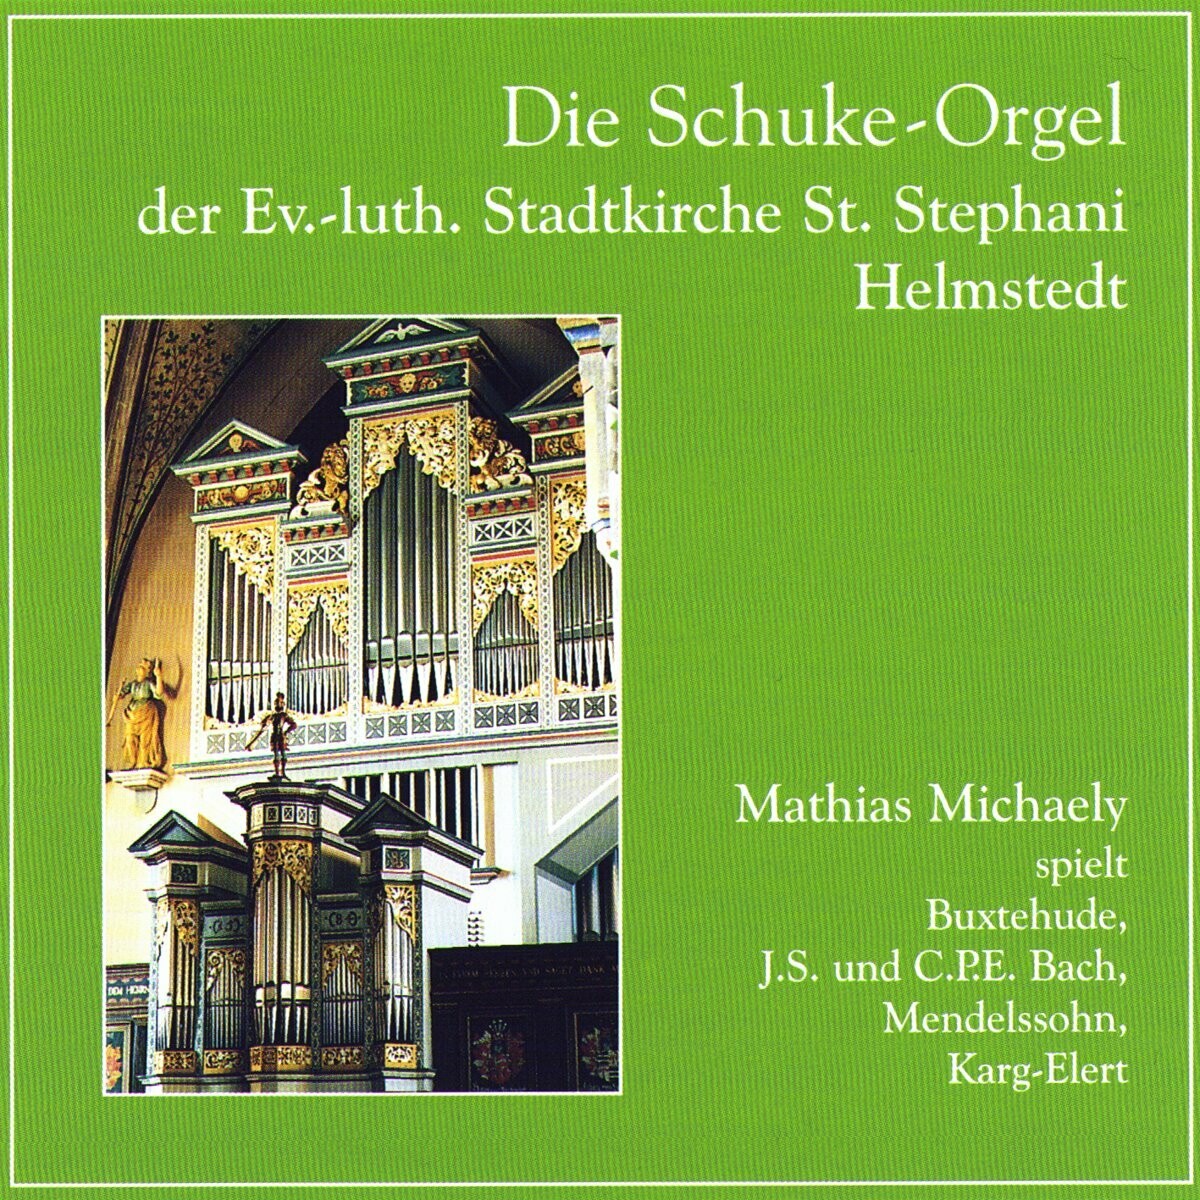 Die Schuke-Orgel, St. Stephani | CD